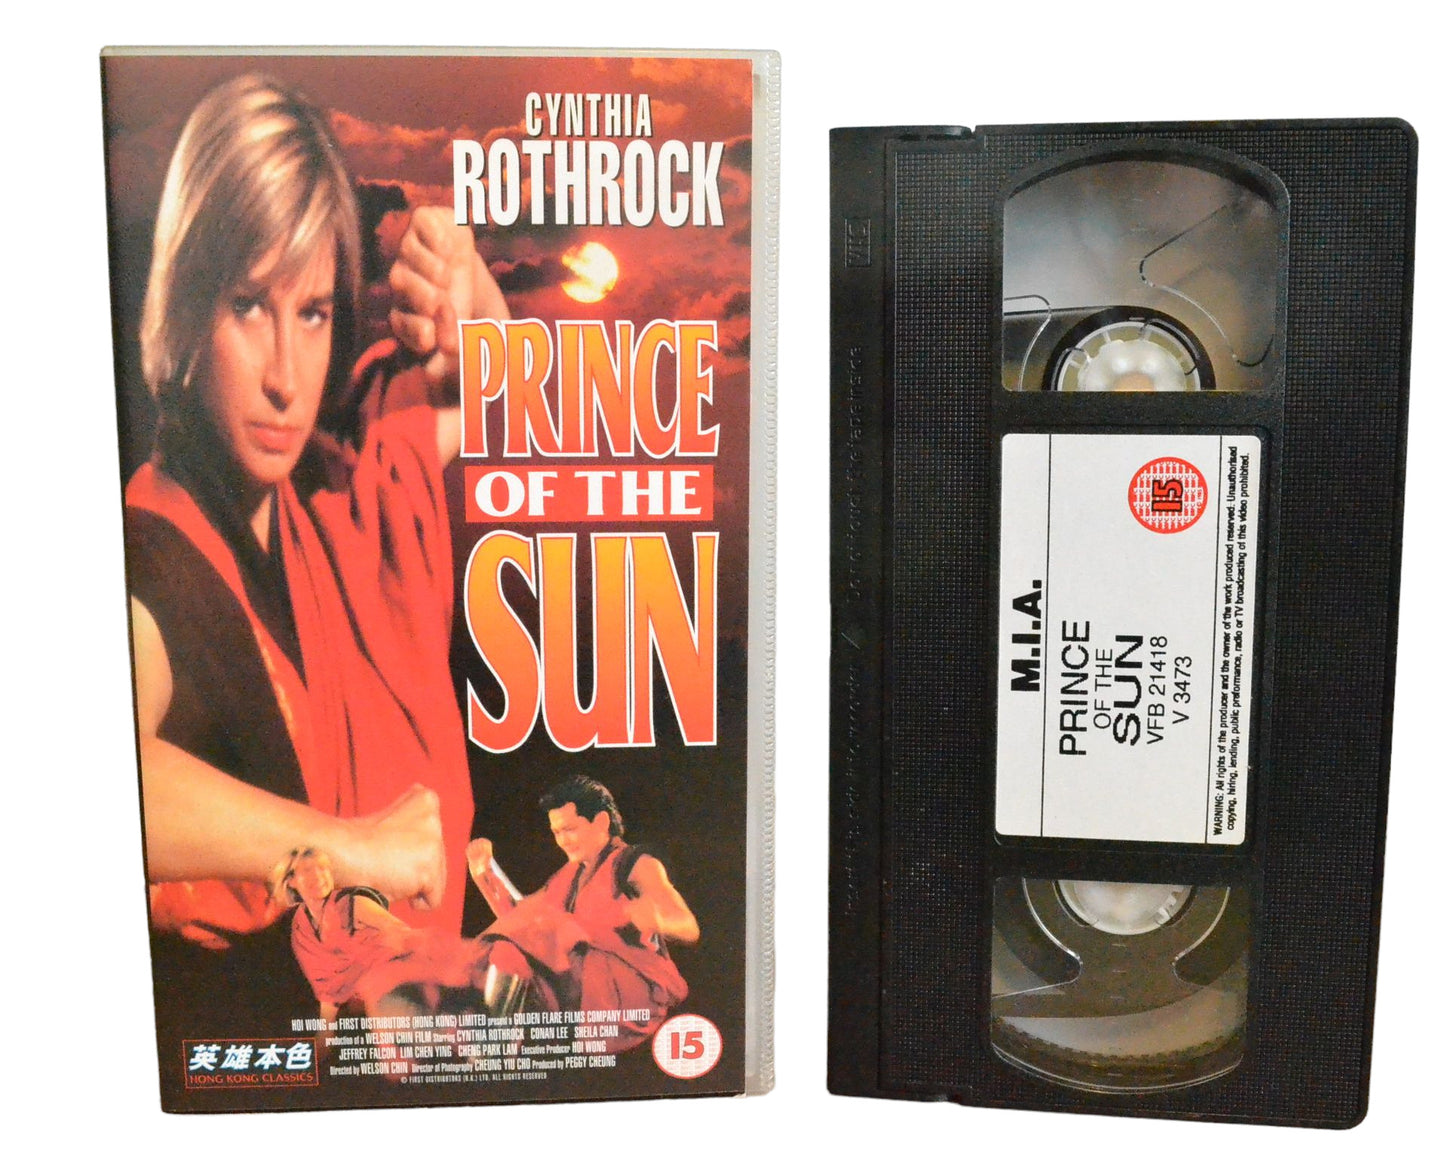 Prince Of The Sun - Cynthia Rothrock - M.I.A. Video - V3473 - Action - Pal - VHS-